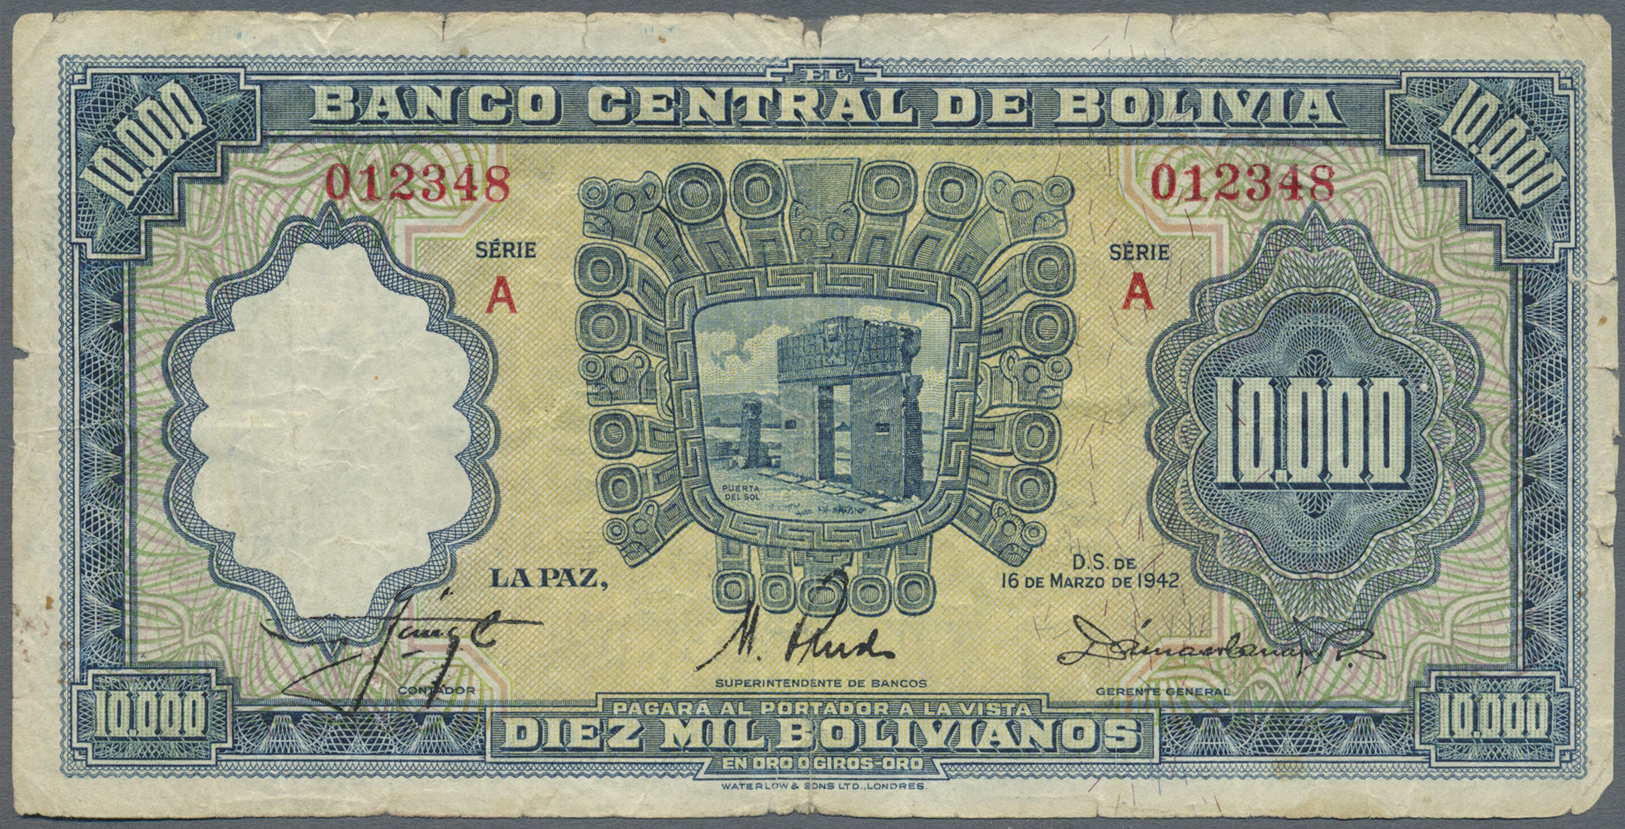 00322 Bolivia / Bolivien: 10.000 Bolivianos 1942 P. 137, Ised With Folds, Stronger Center Fold, Border Tears, Center Hol - Bolivia